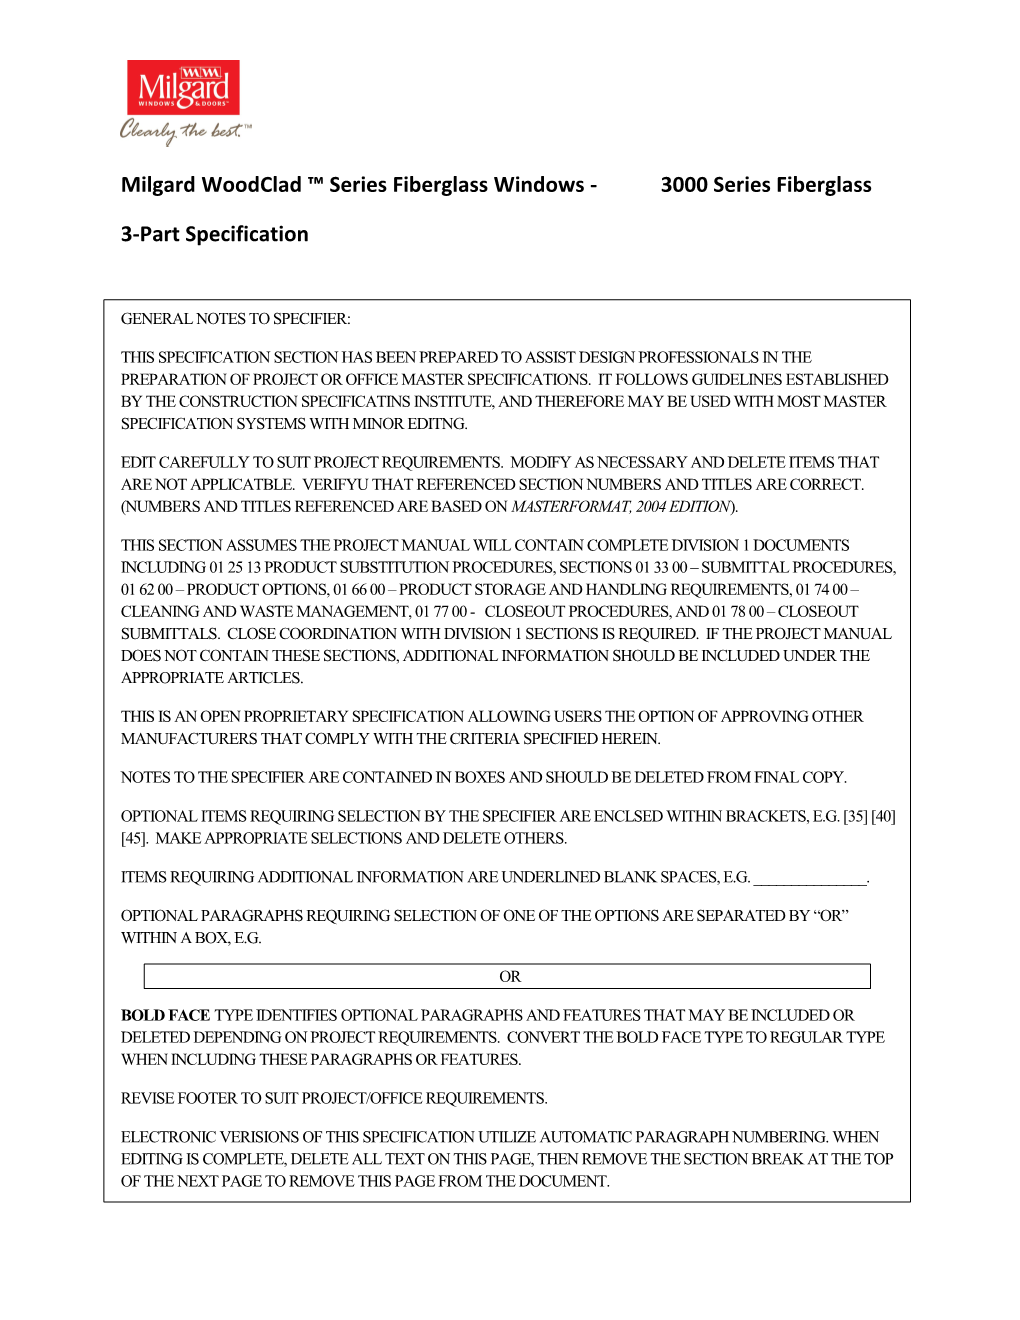 Milgard Woodclad Series Fiberglass Windows - 3000 Series Fiberglass